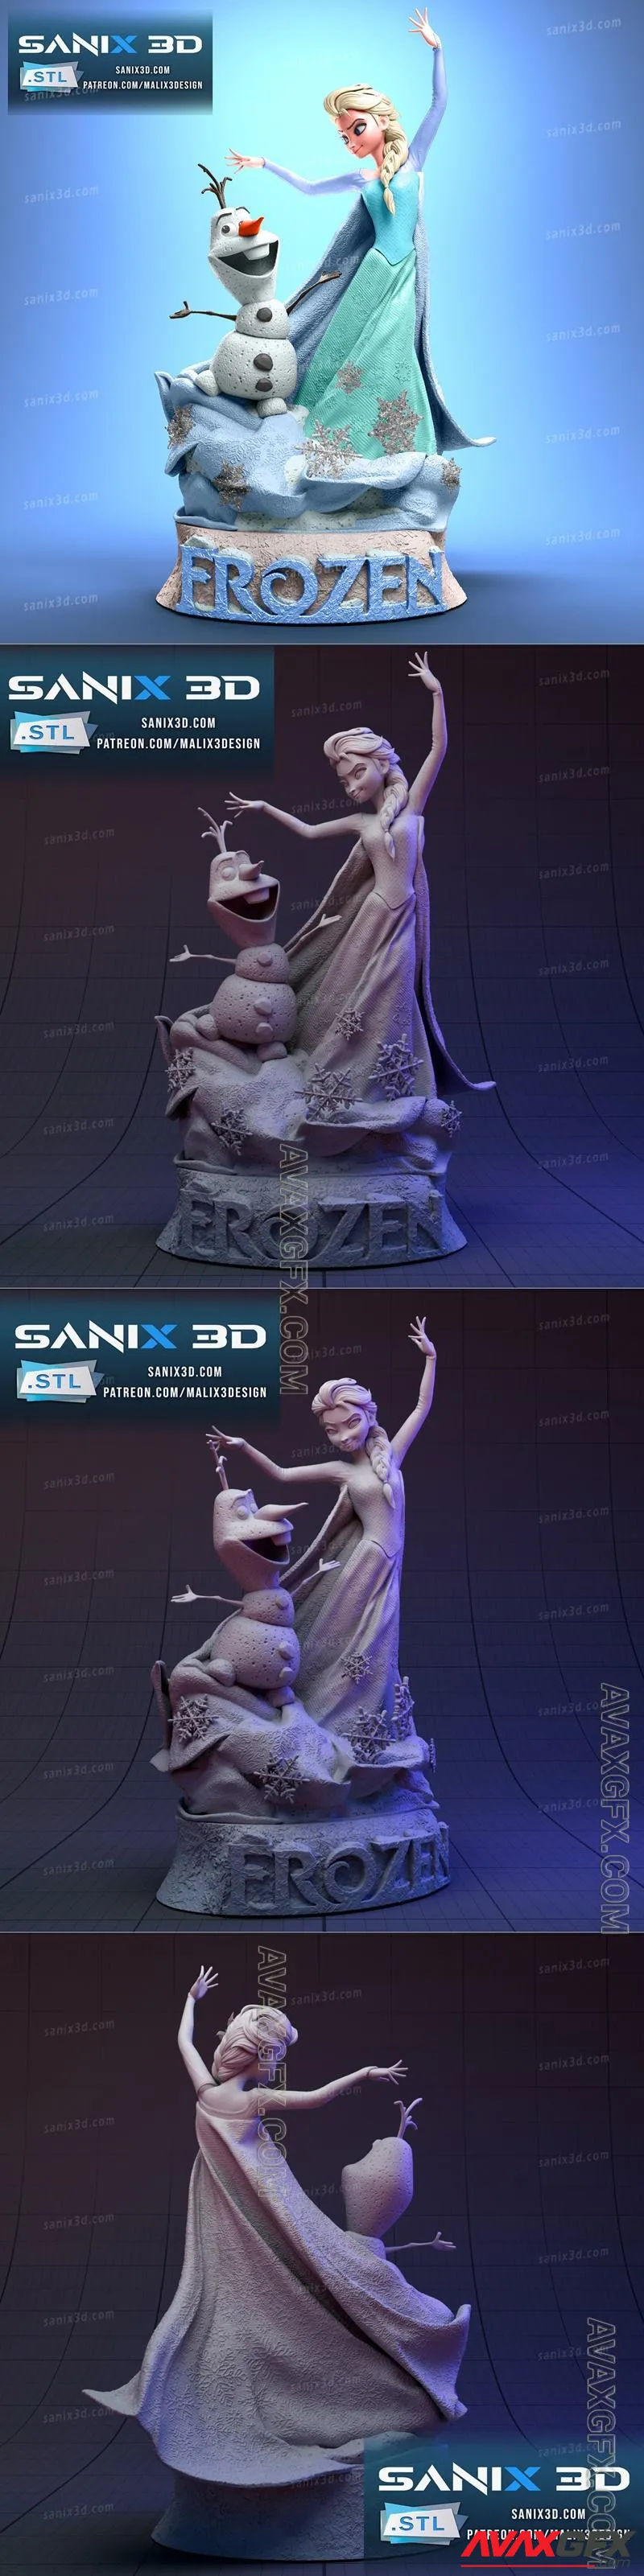 Sanix - Frozen - STL 3D Model